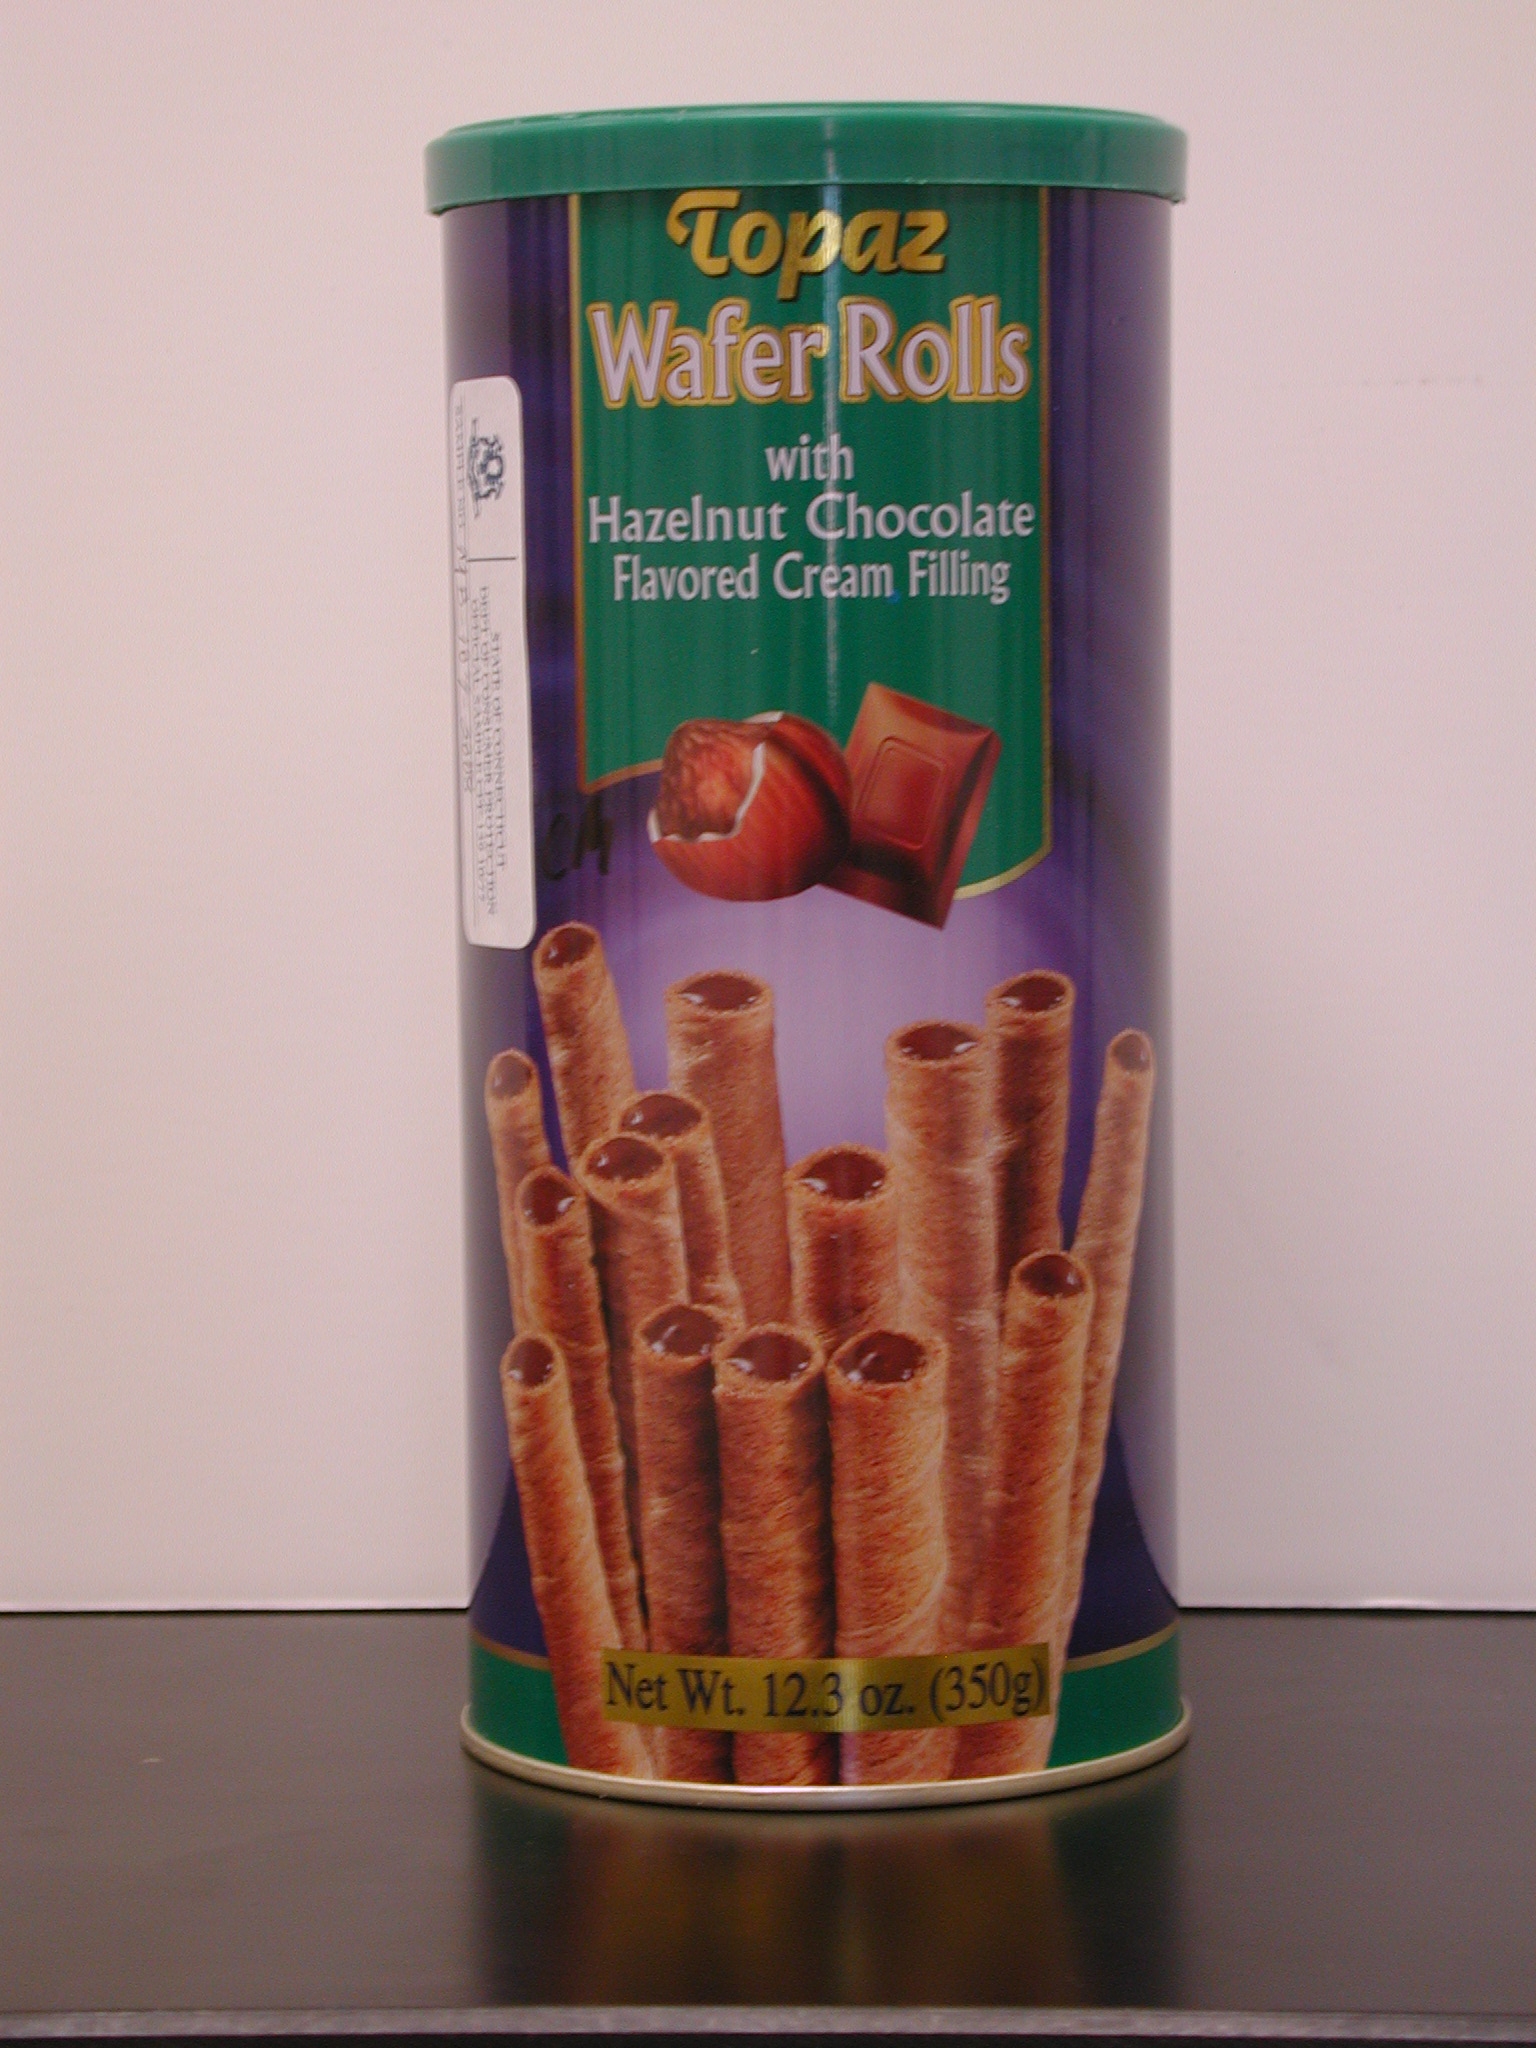 label from Topaz Hazelnut Wafer Rolls with Hazelnut Chocolate Flavored Creme Filling